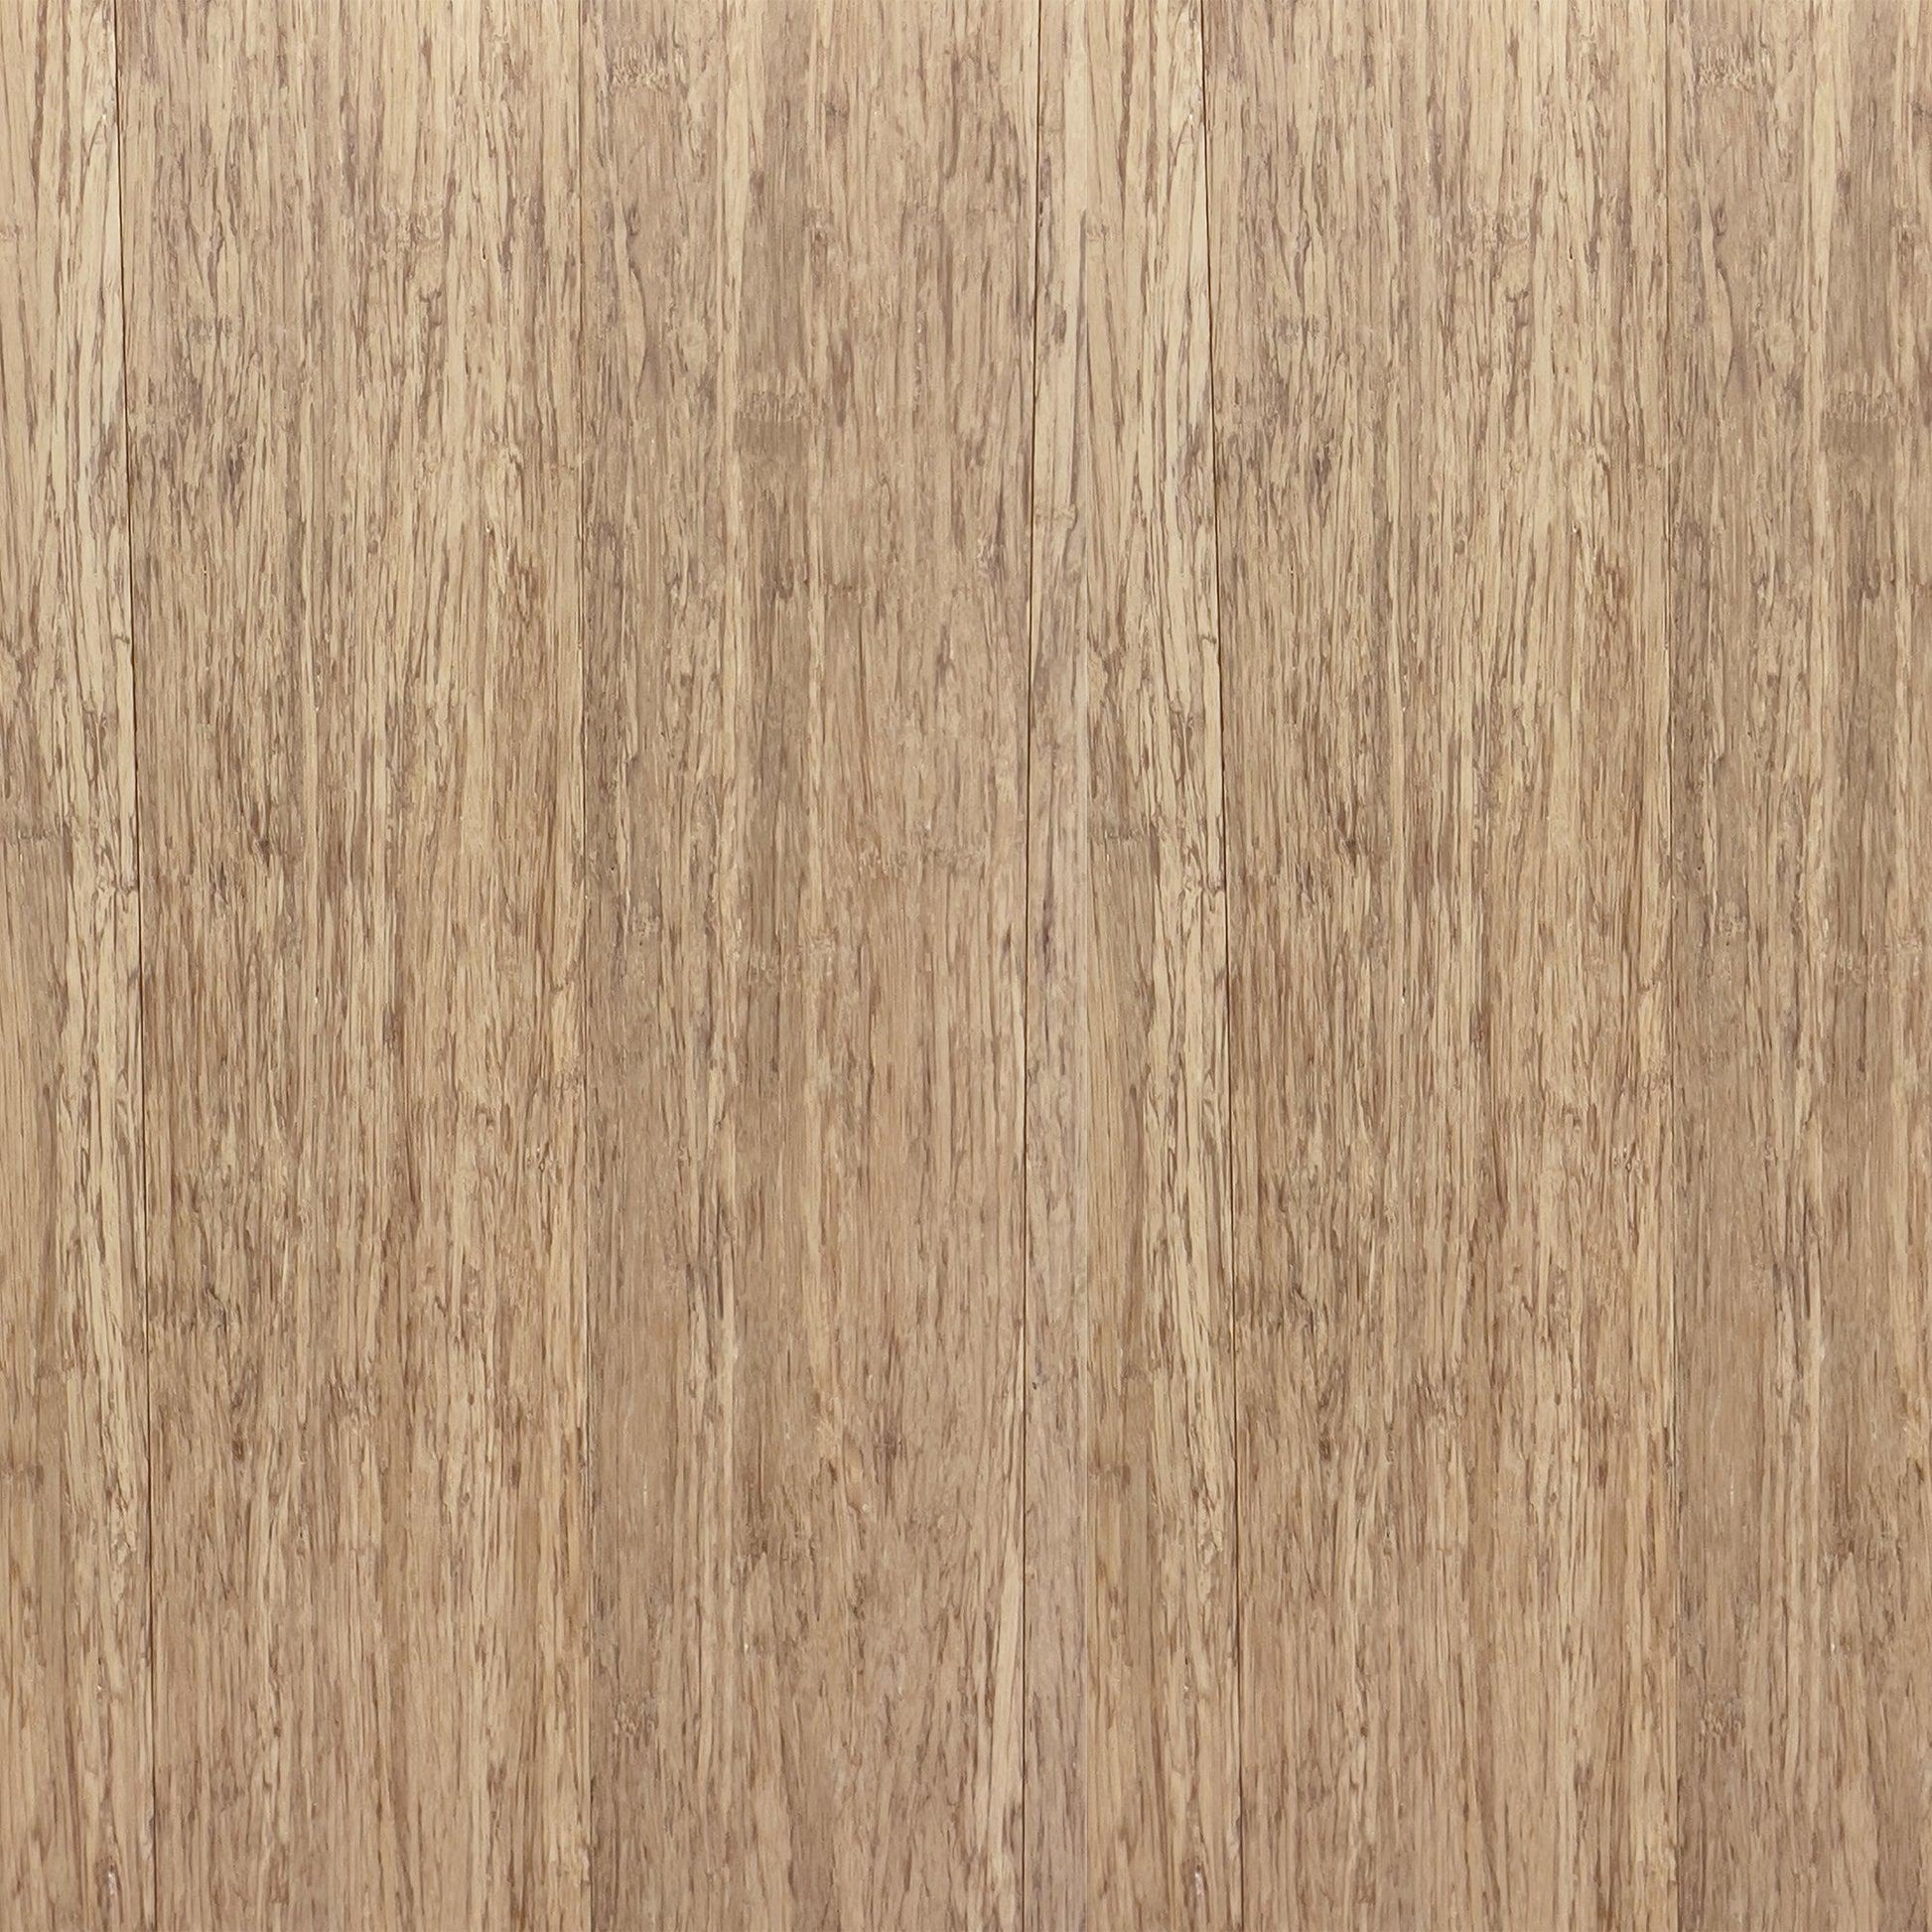 White Sand Bamboo Flooring by KLD Home